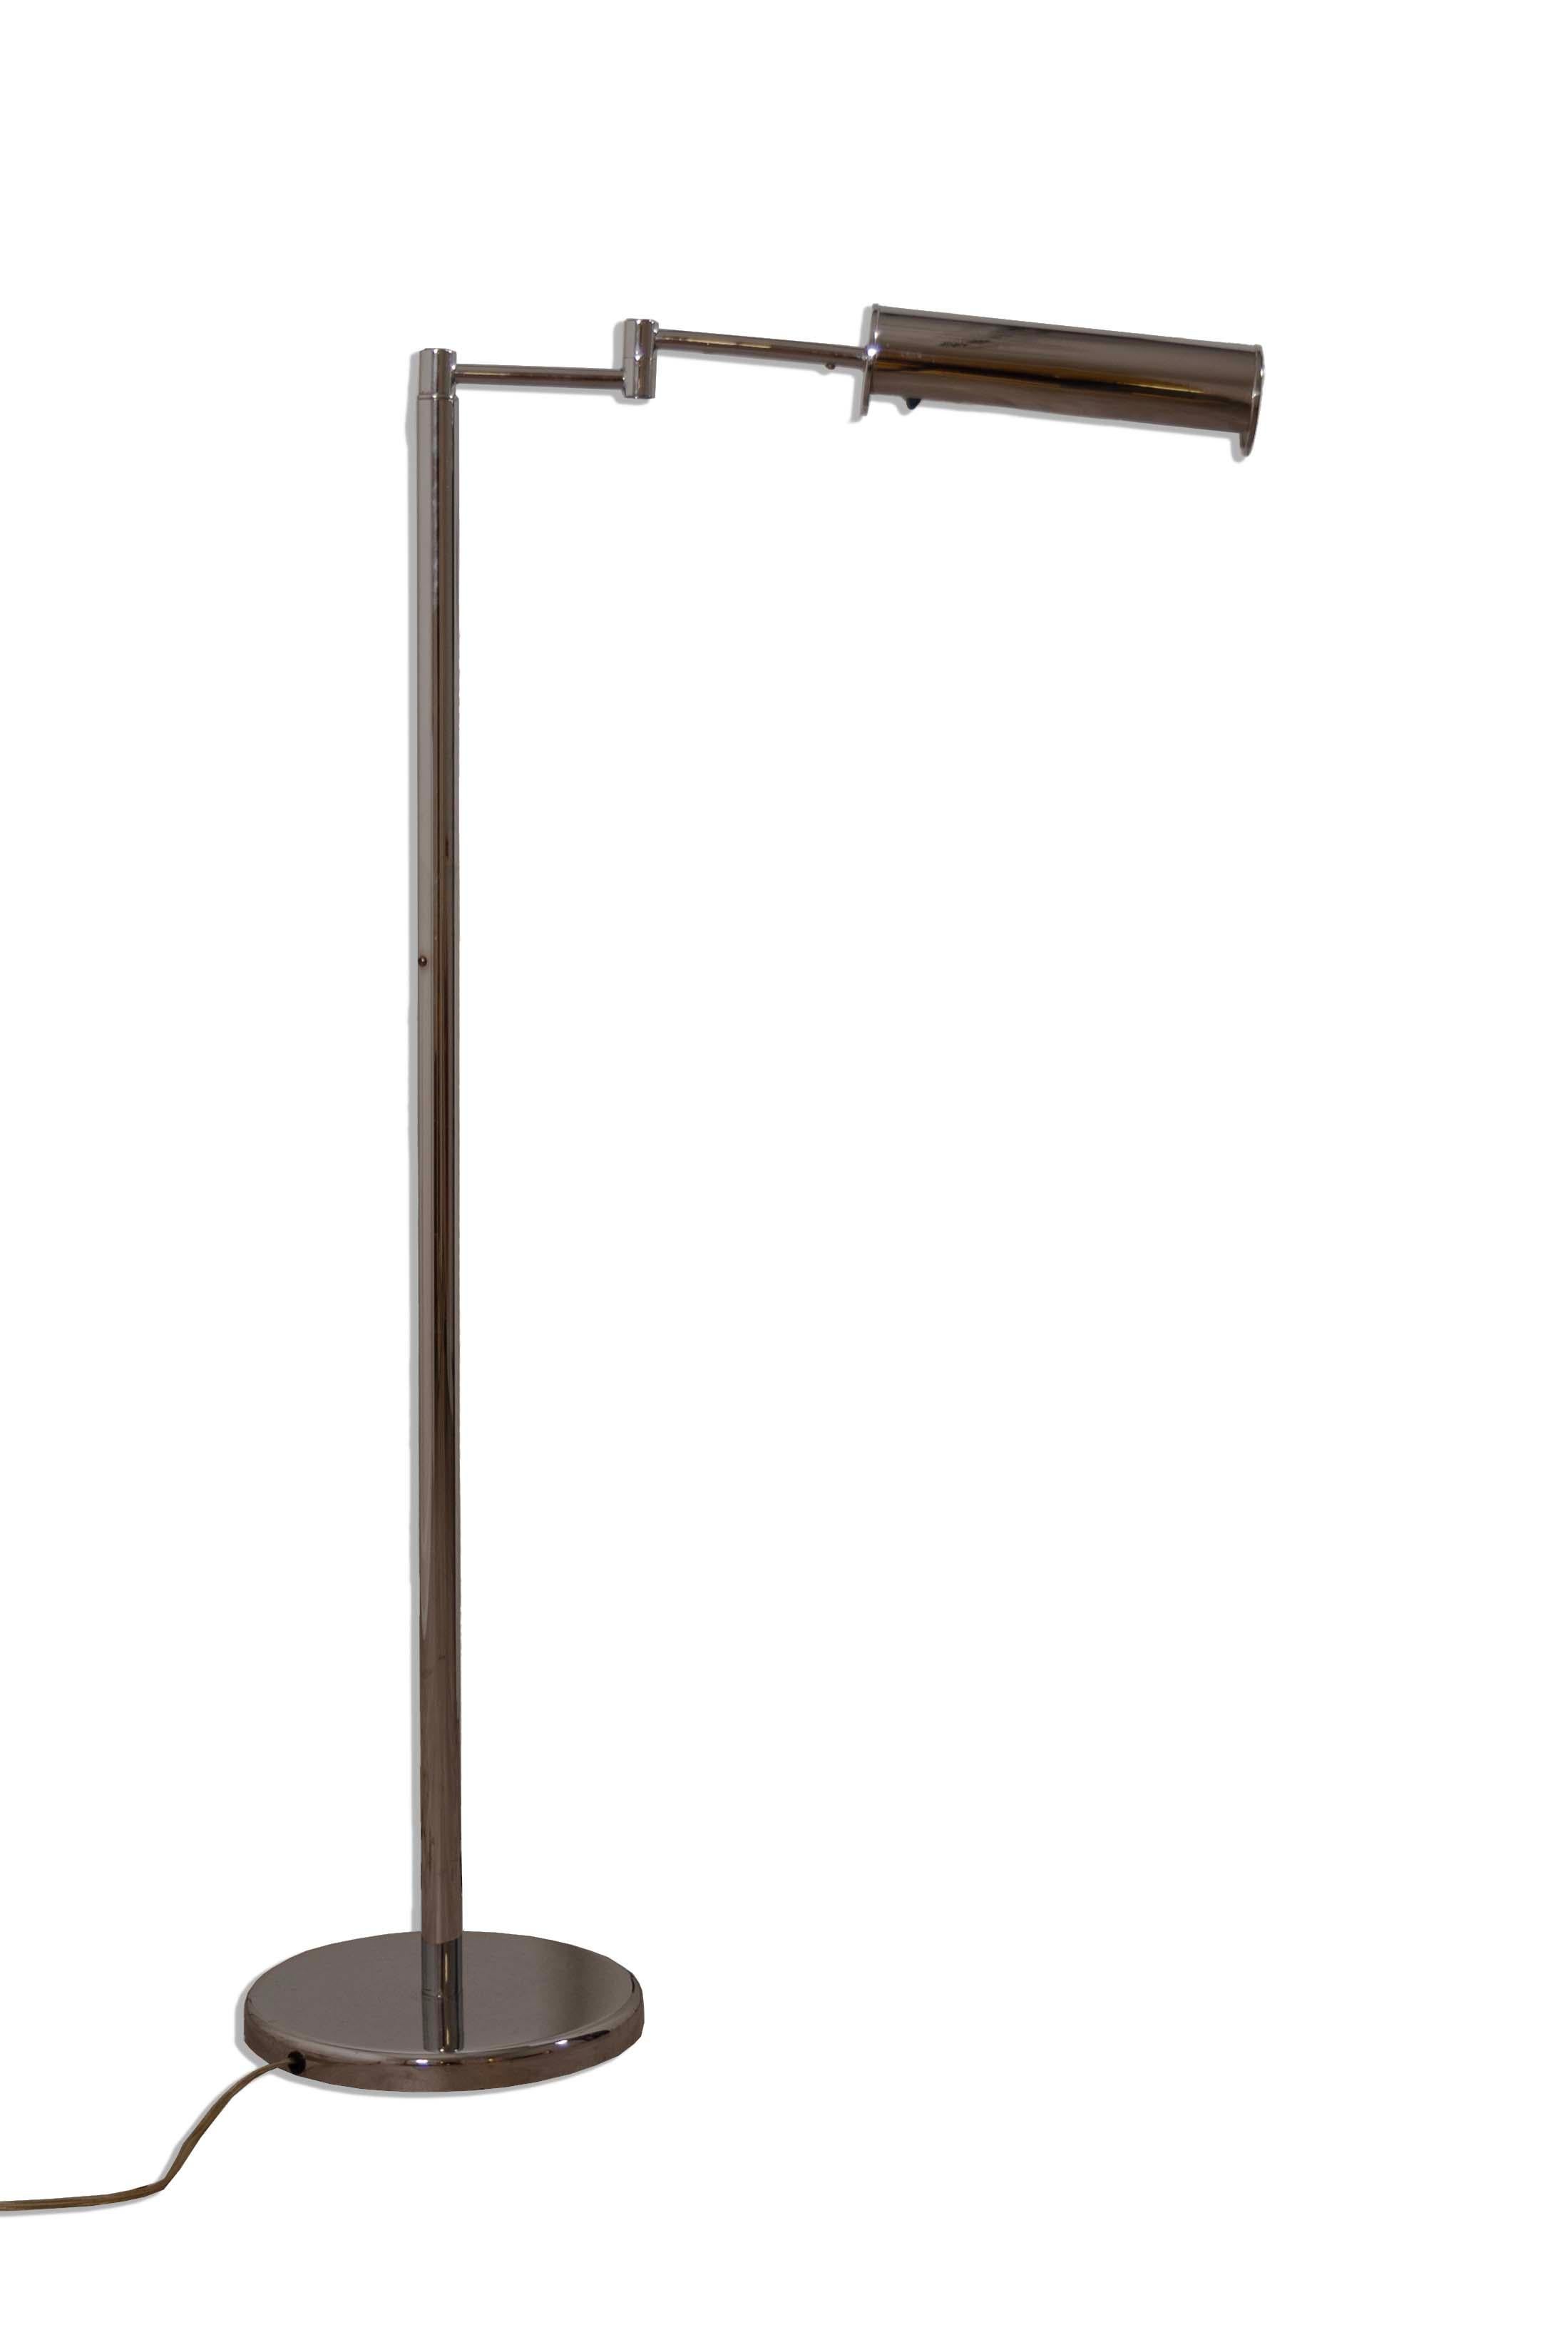 American Von Nessen Chrome Extendable Reading Lamp Mid Century Modern For Sale